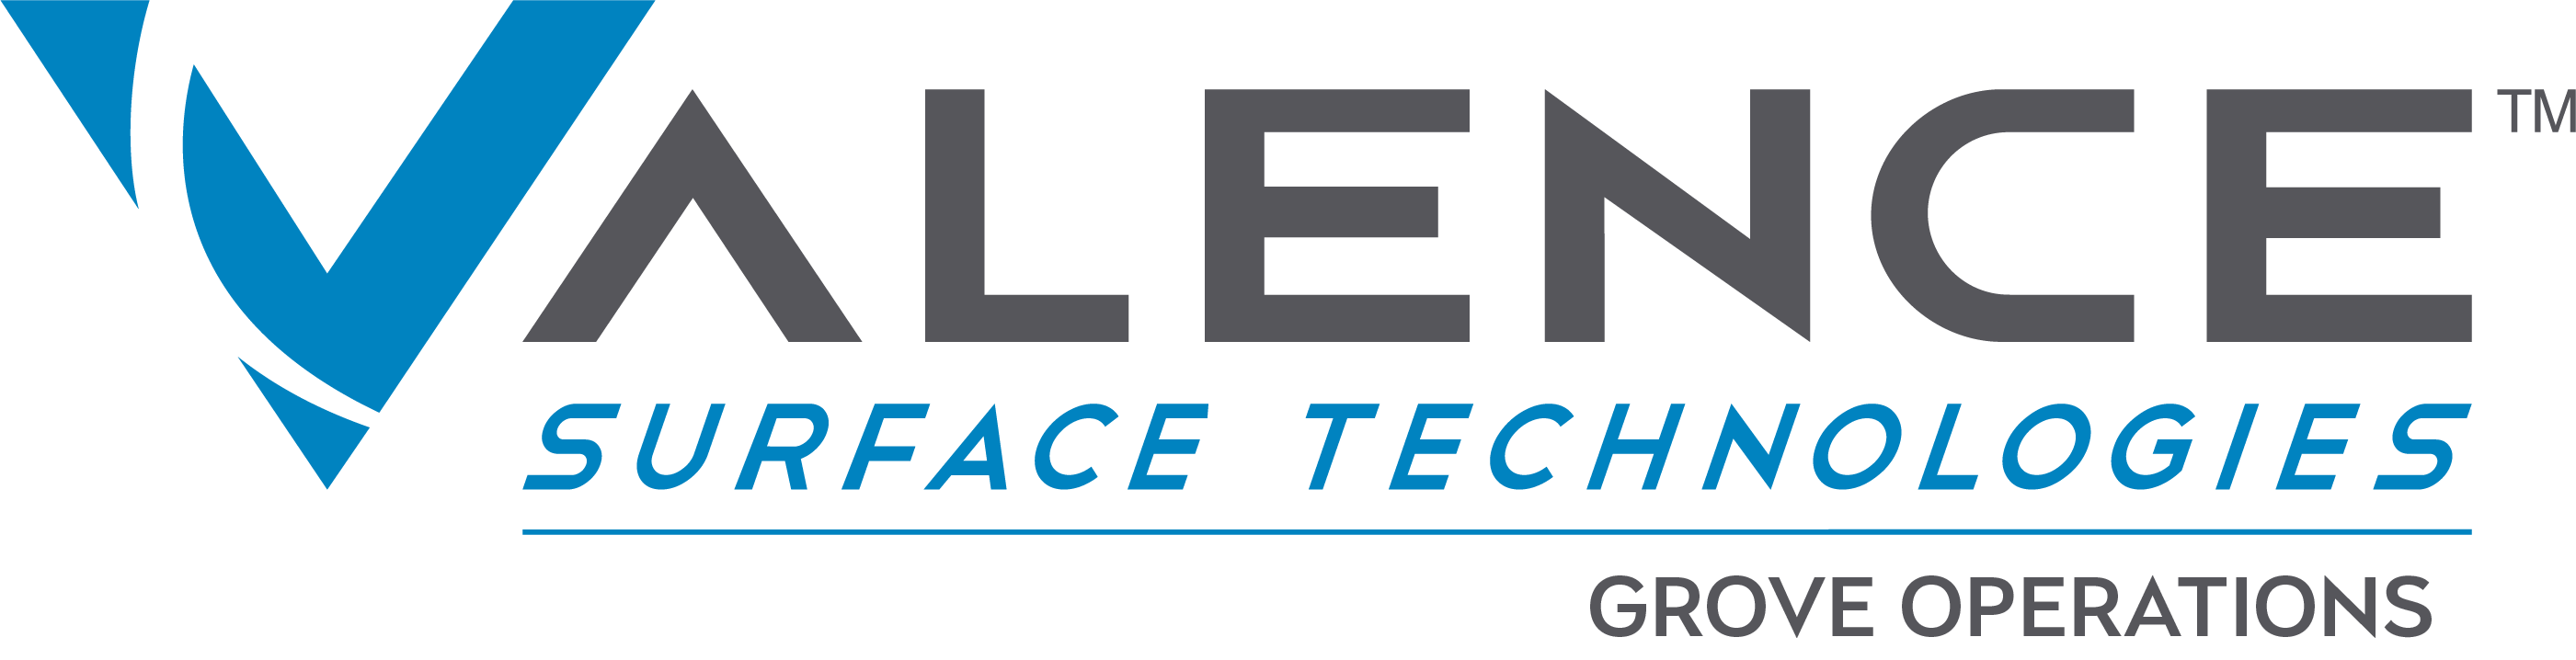 Valence Surface Technologies Grove logo